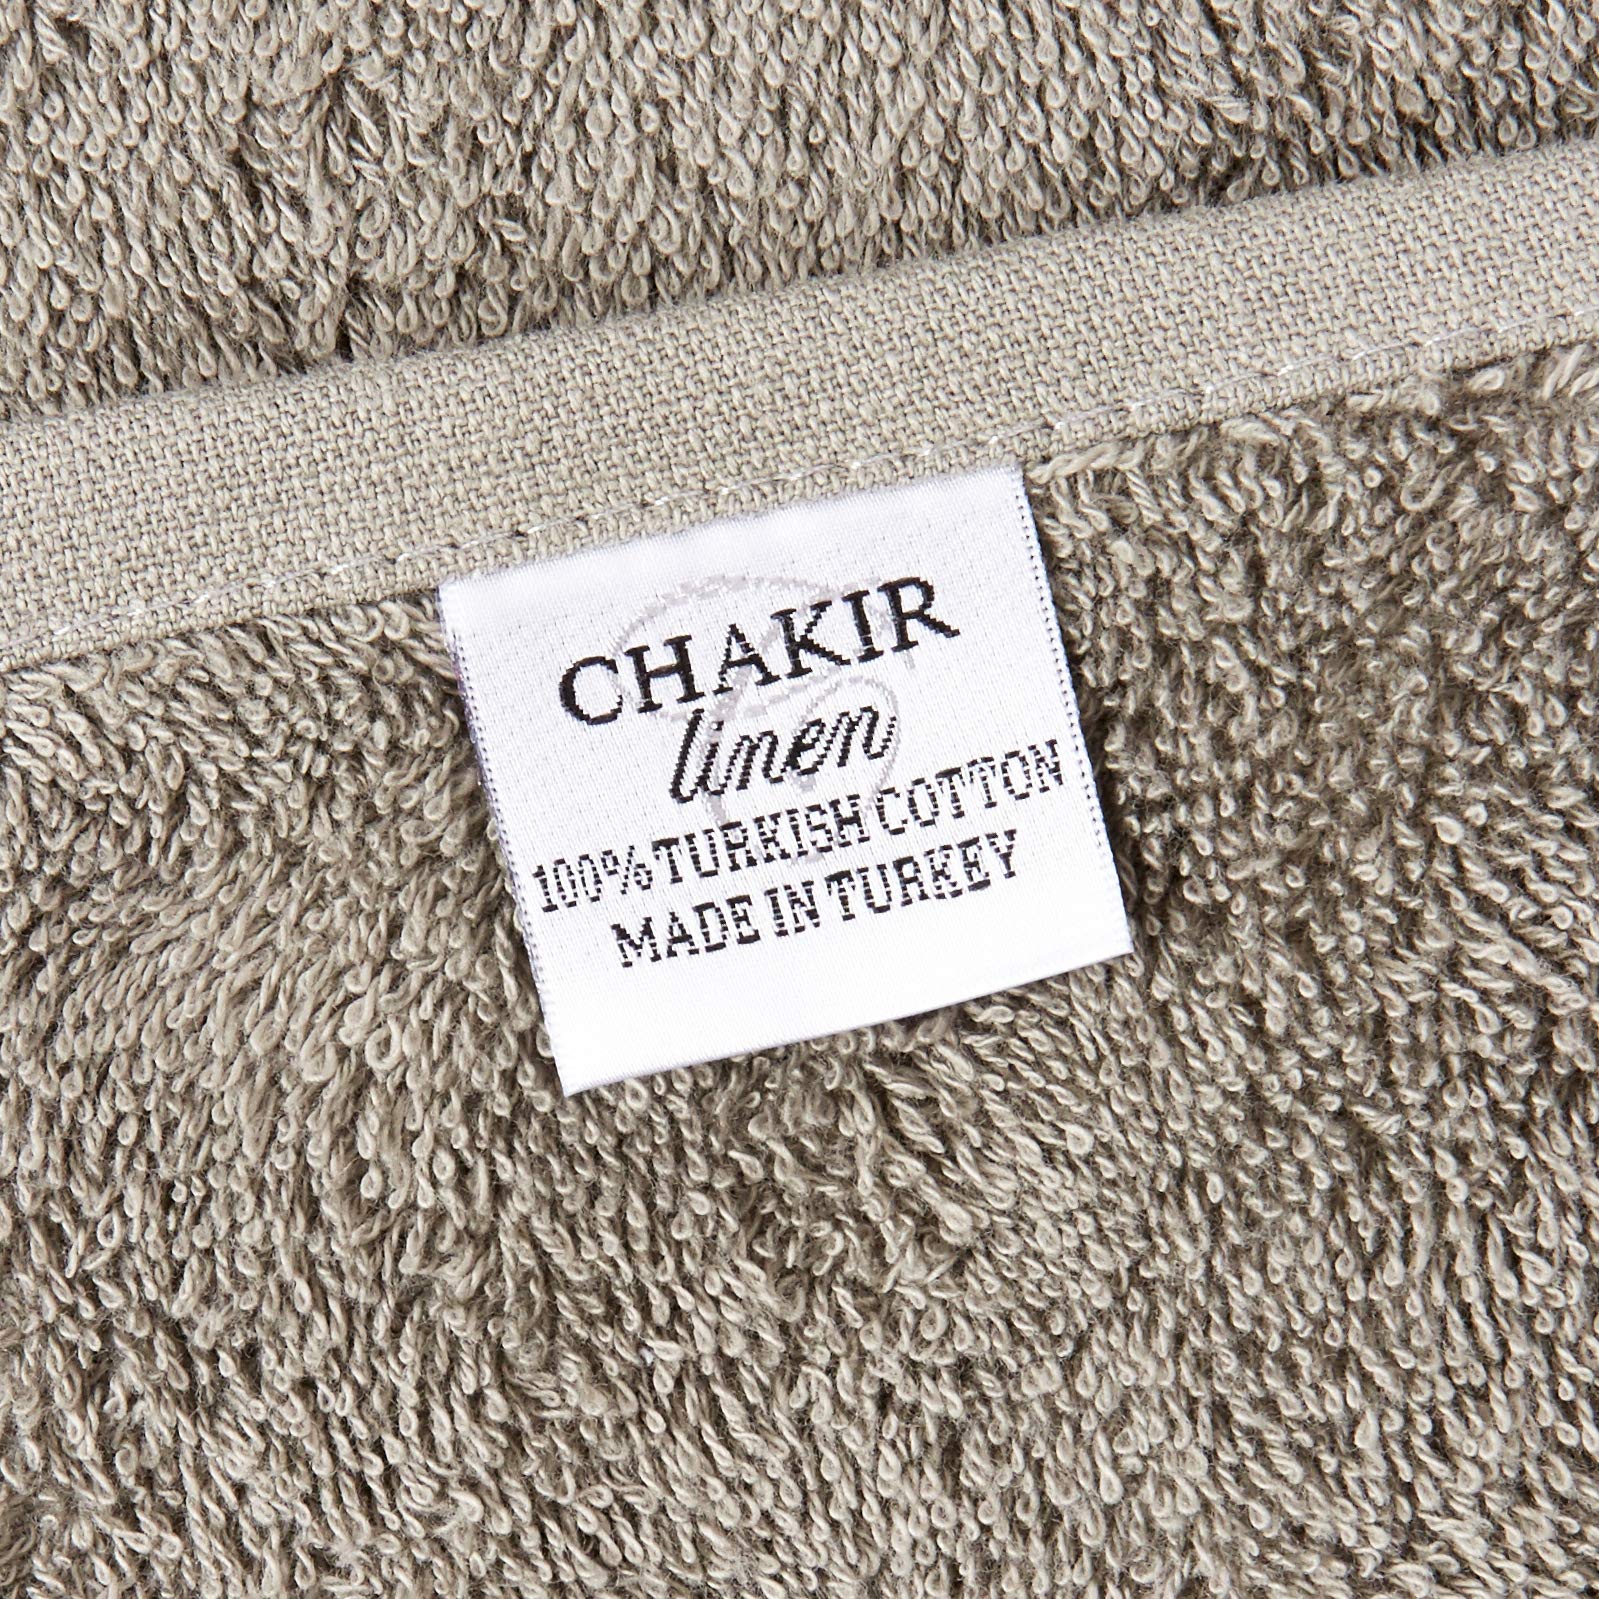 Chakir Turkish Linens Turkish Cotton Luxury Hotel & Spa Bath Towel, Bath Sheet - Set of 2, Gray